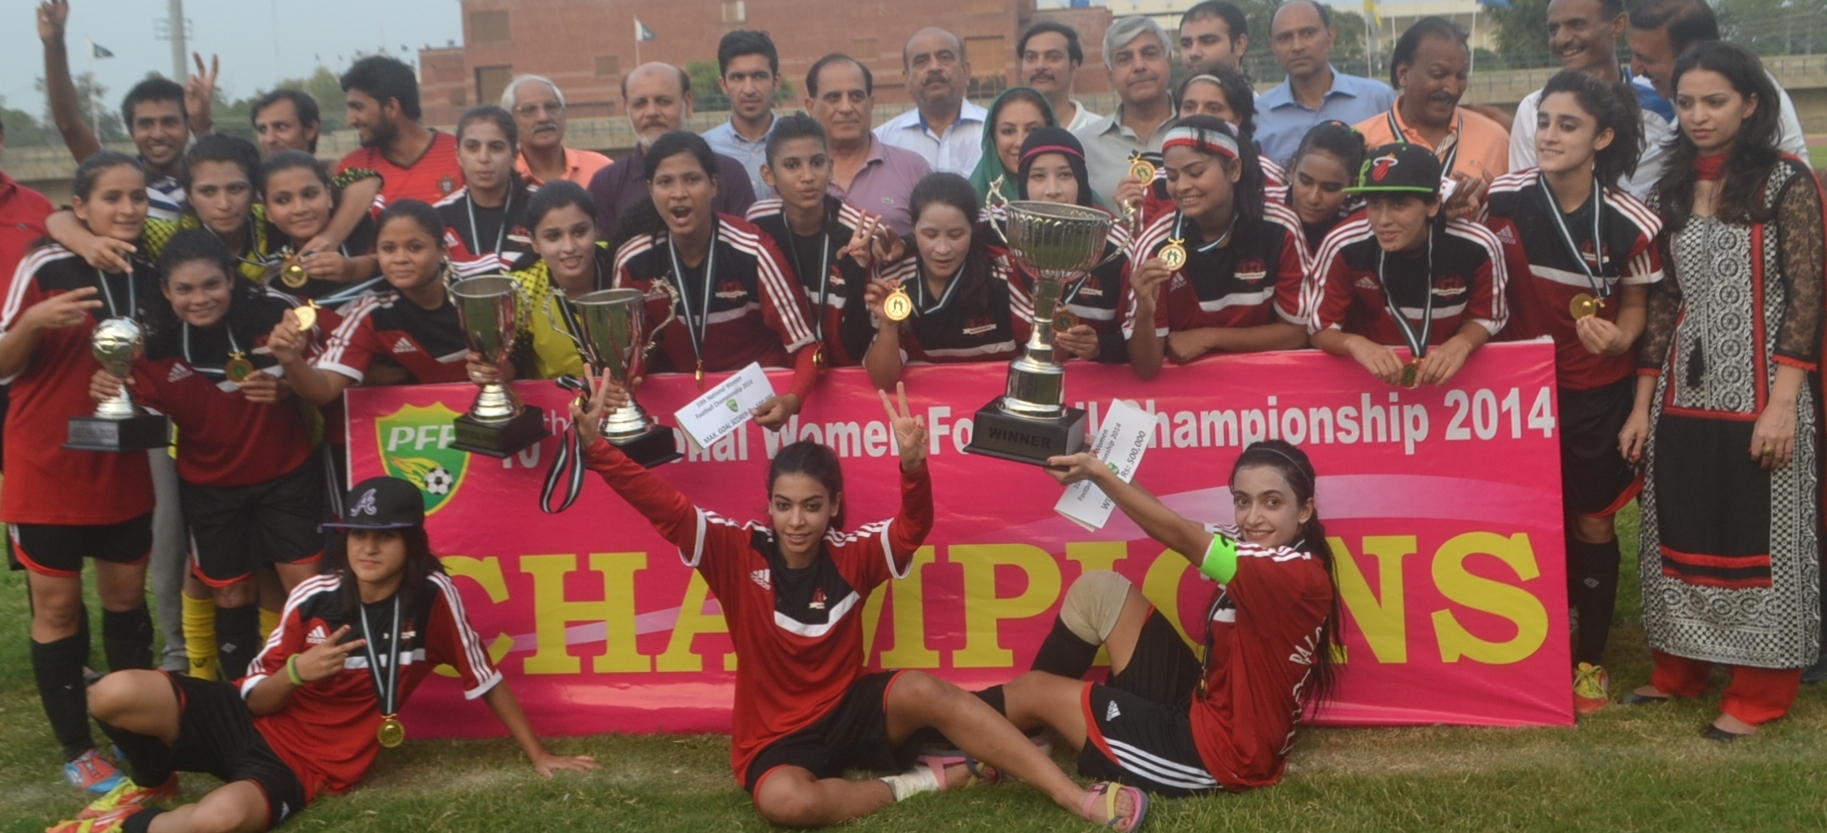 Balochistan United WFC thrash WAPDA 7-0 to win National Women’s Championship in style